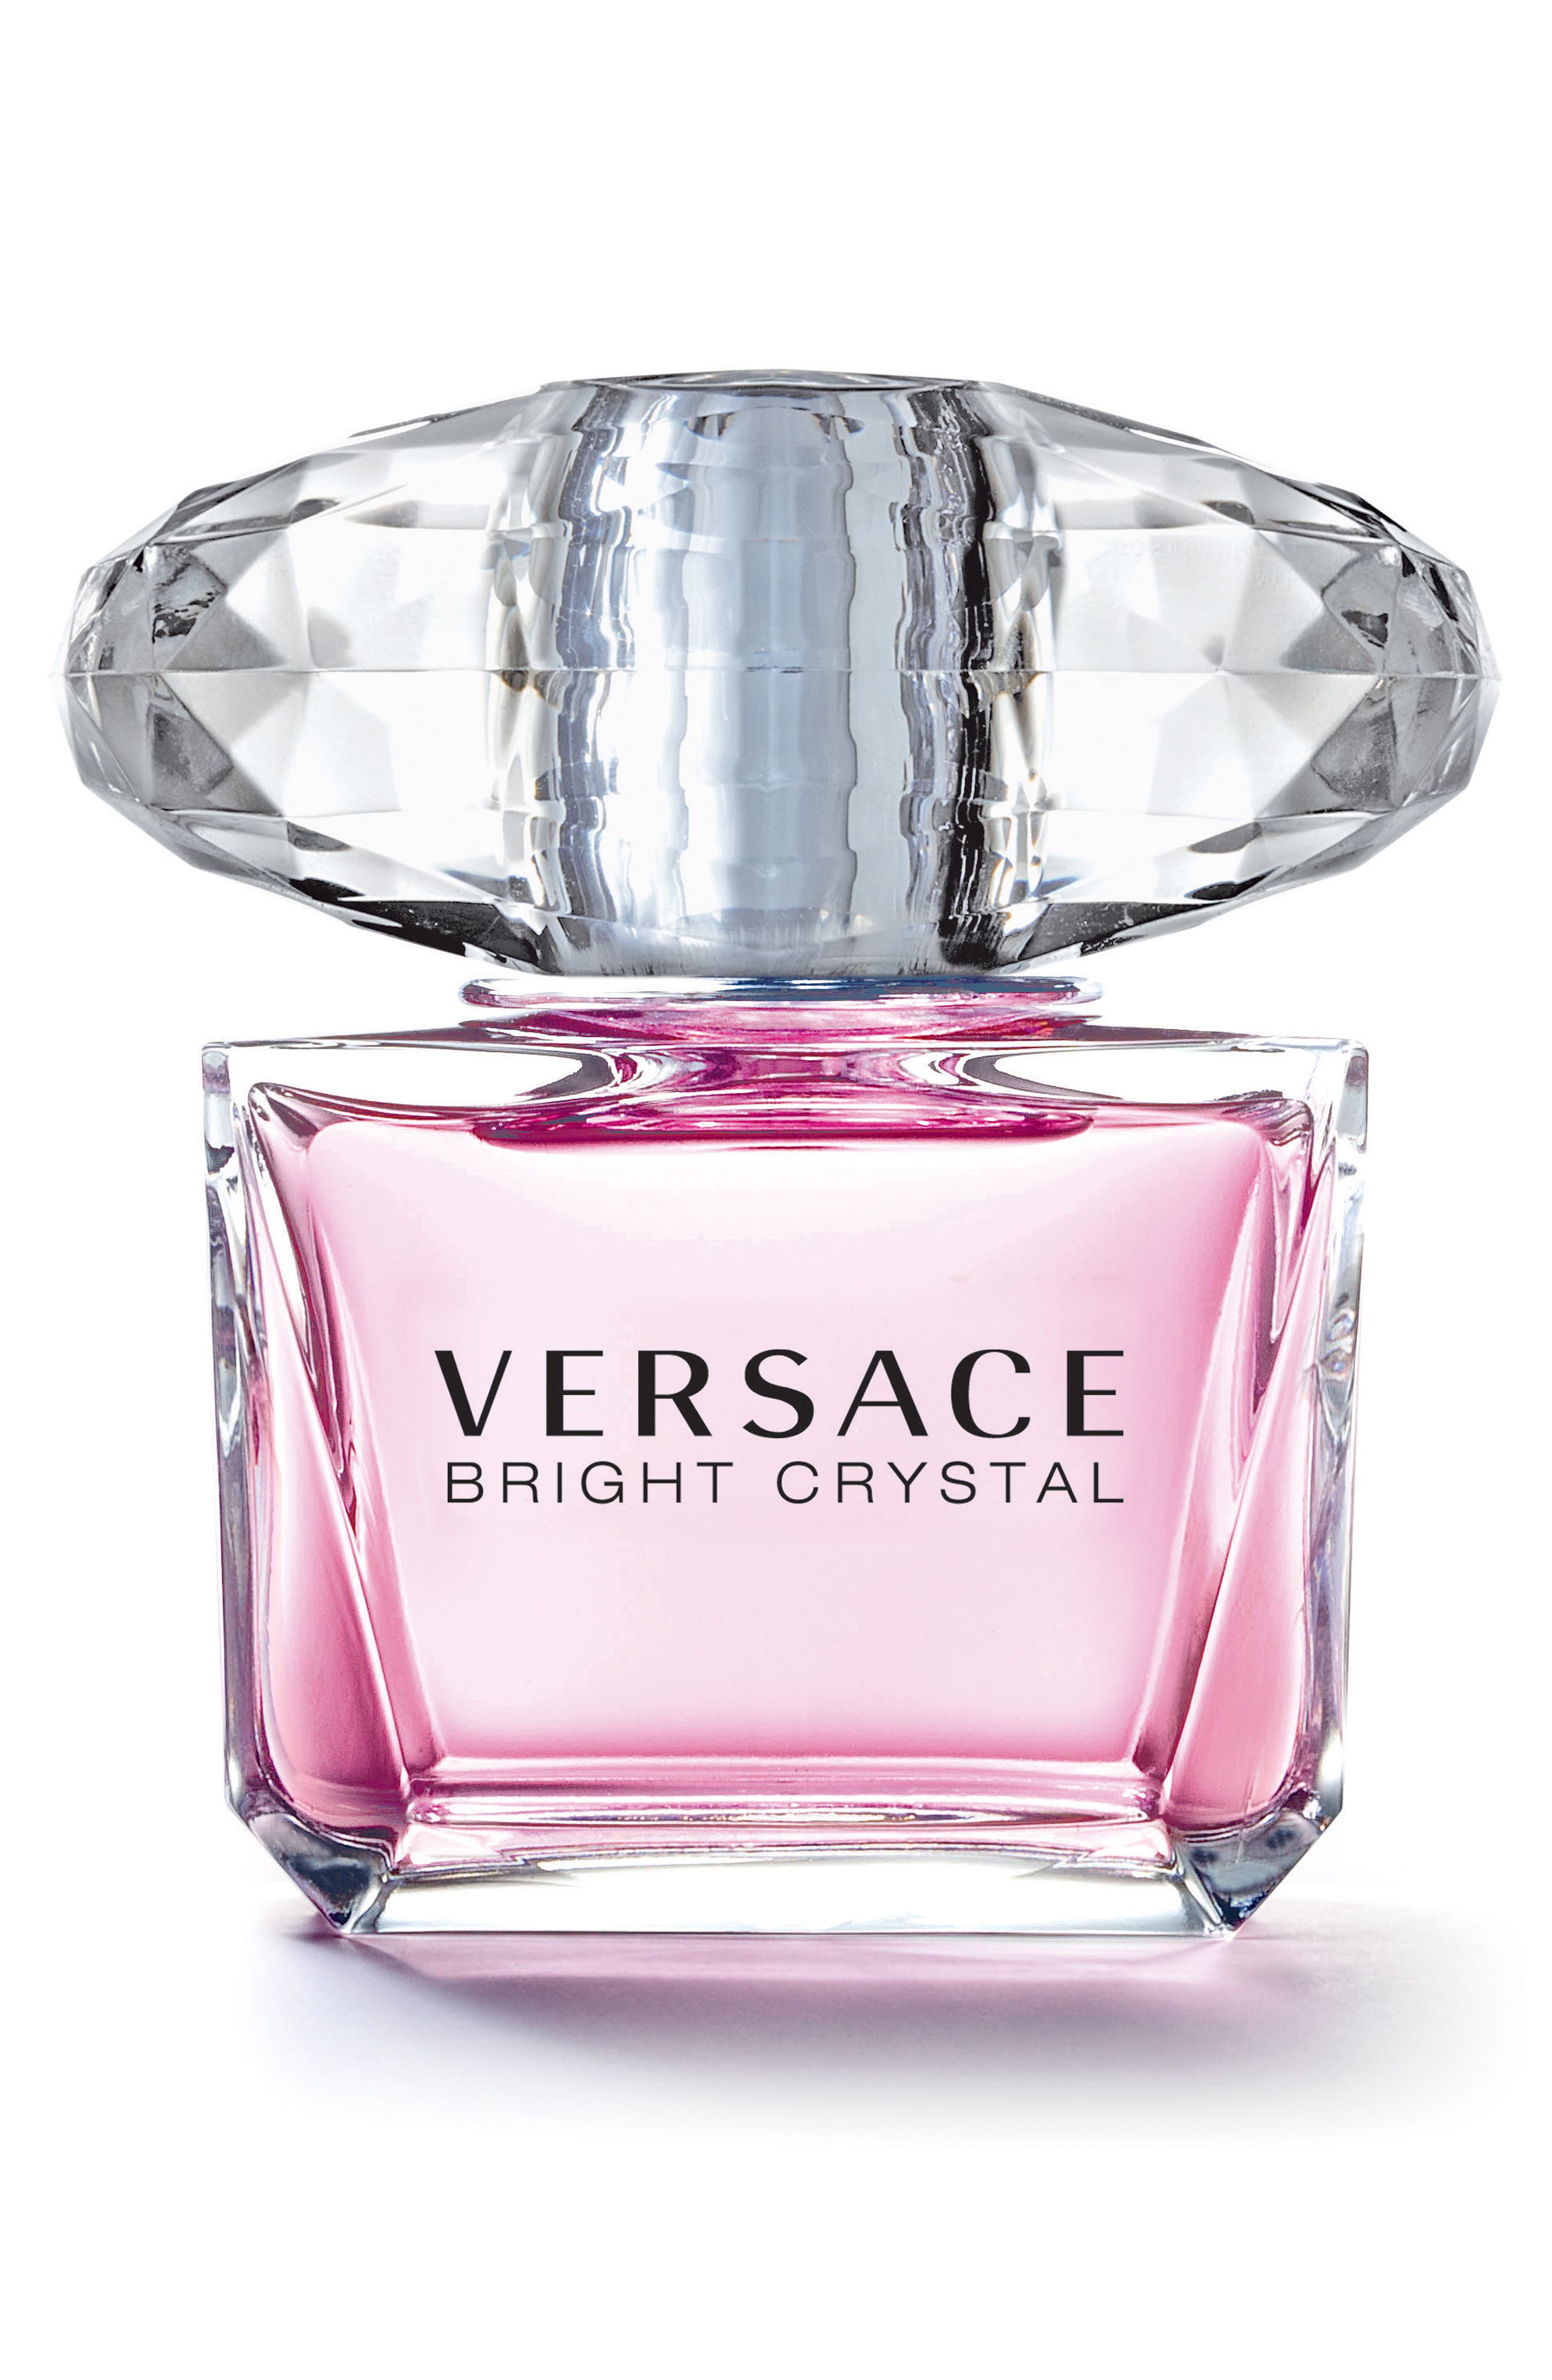 versace perfume pink bottle